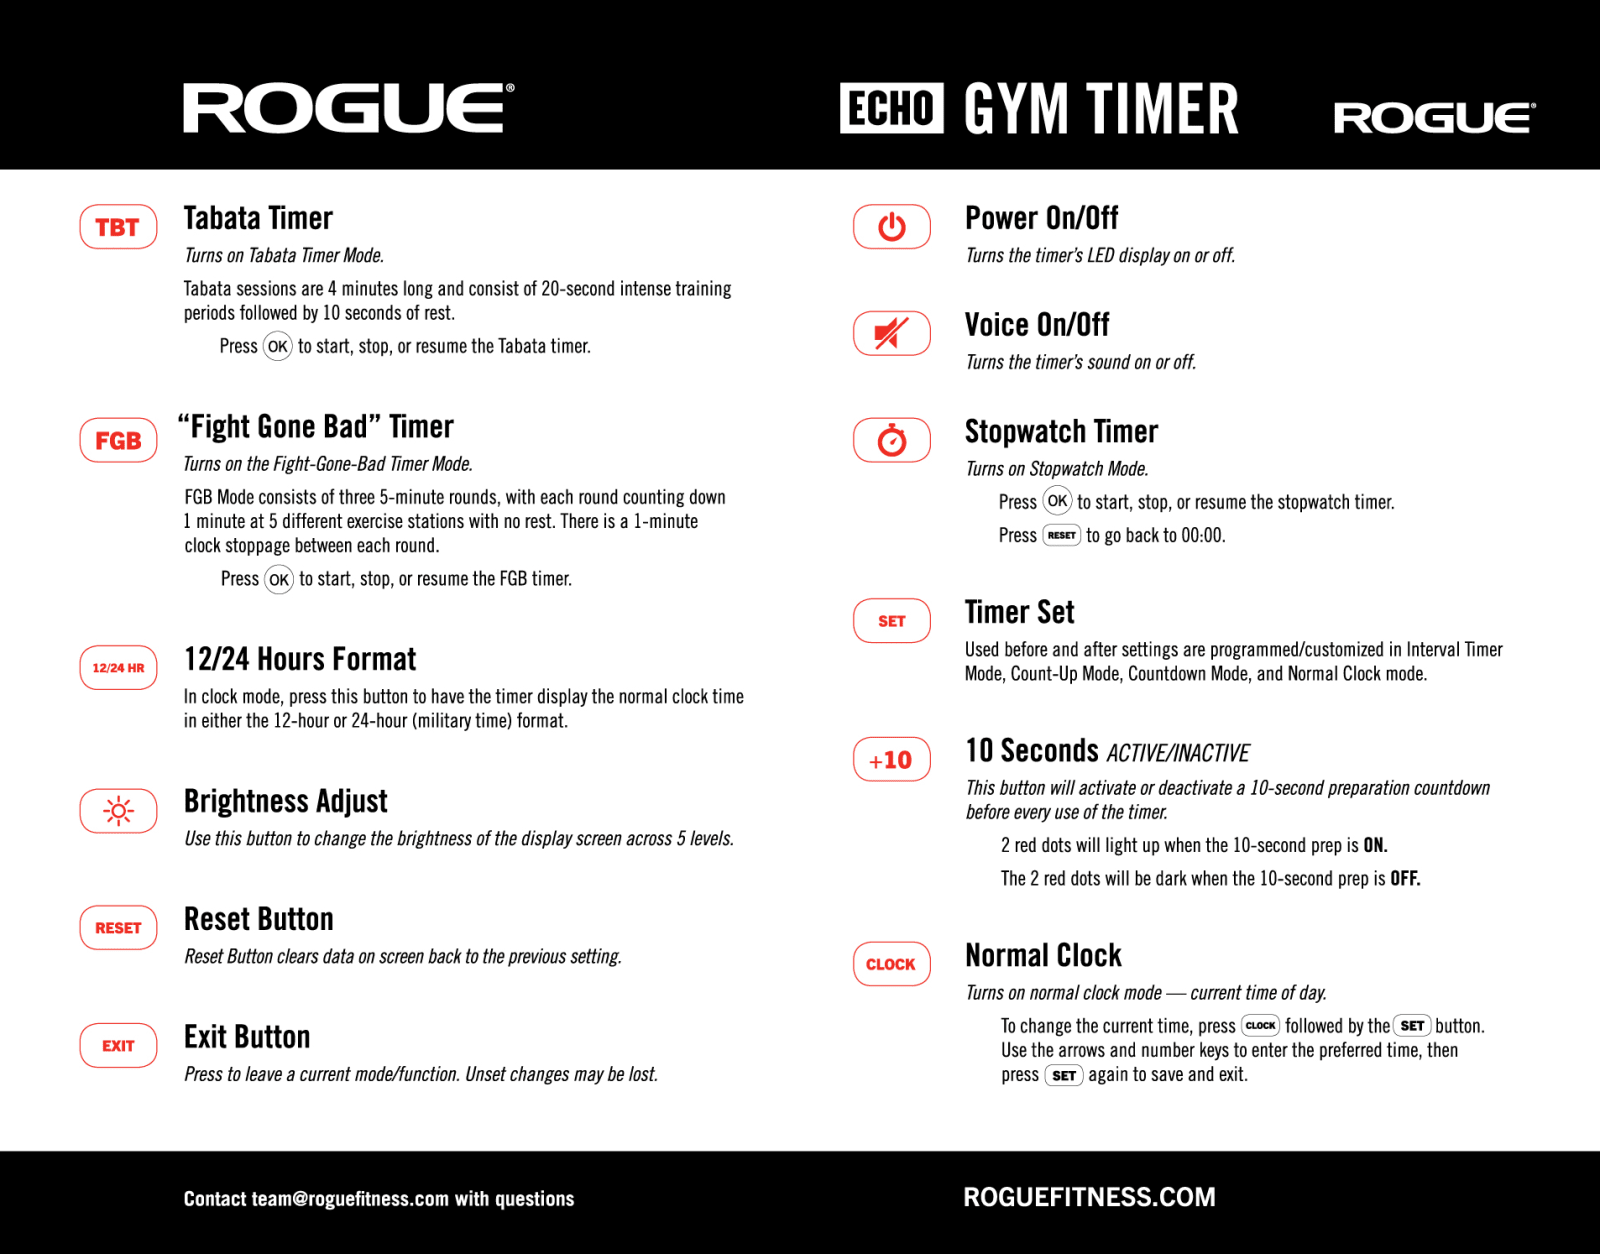 Rogue Echo Gym Timer